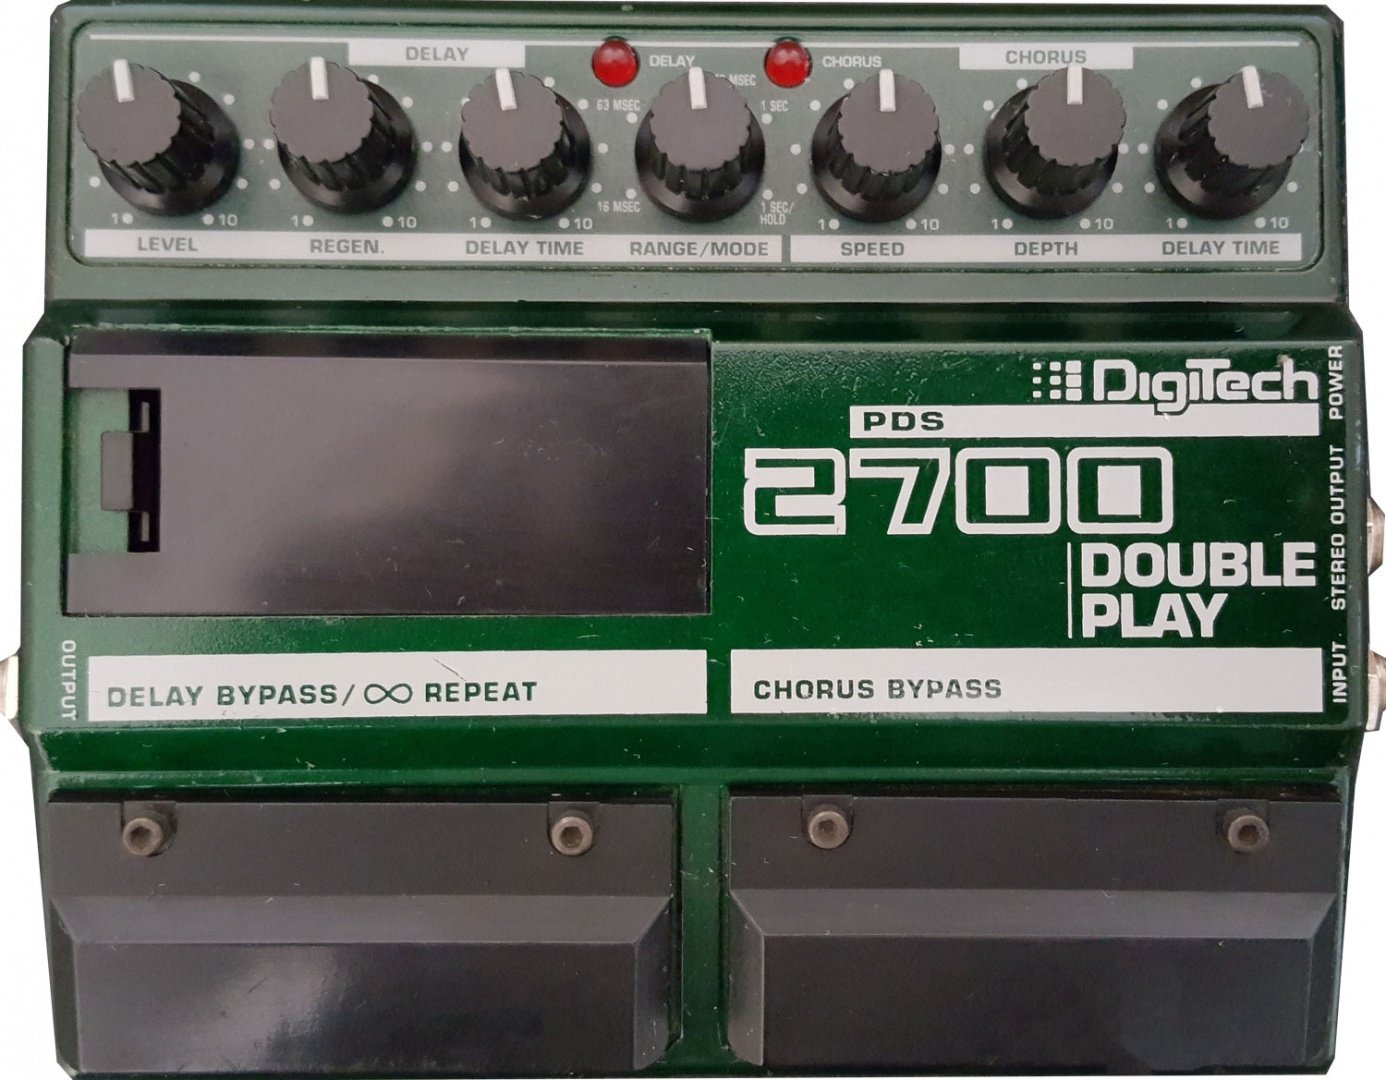 Met andere bands Hen Lijkt op Digitech PDS 2700 Double Play - Pedal on ModularGrid